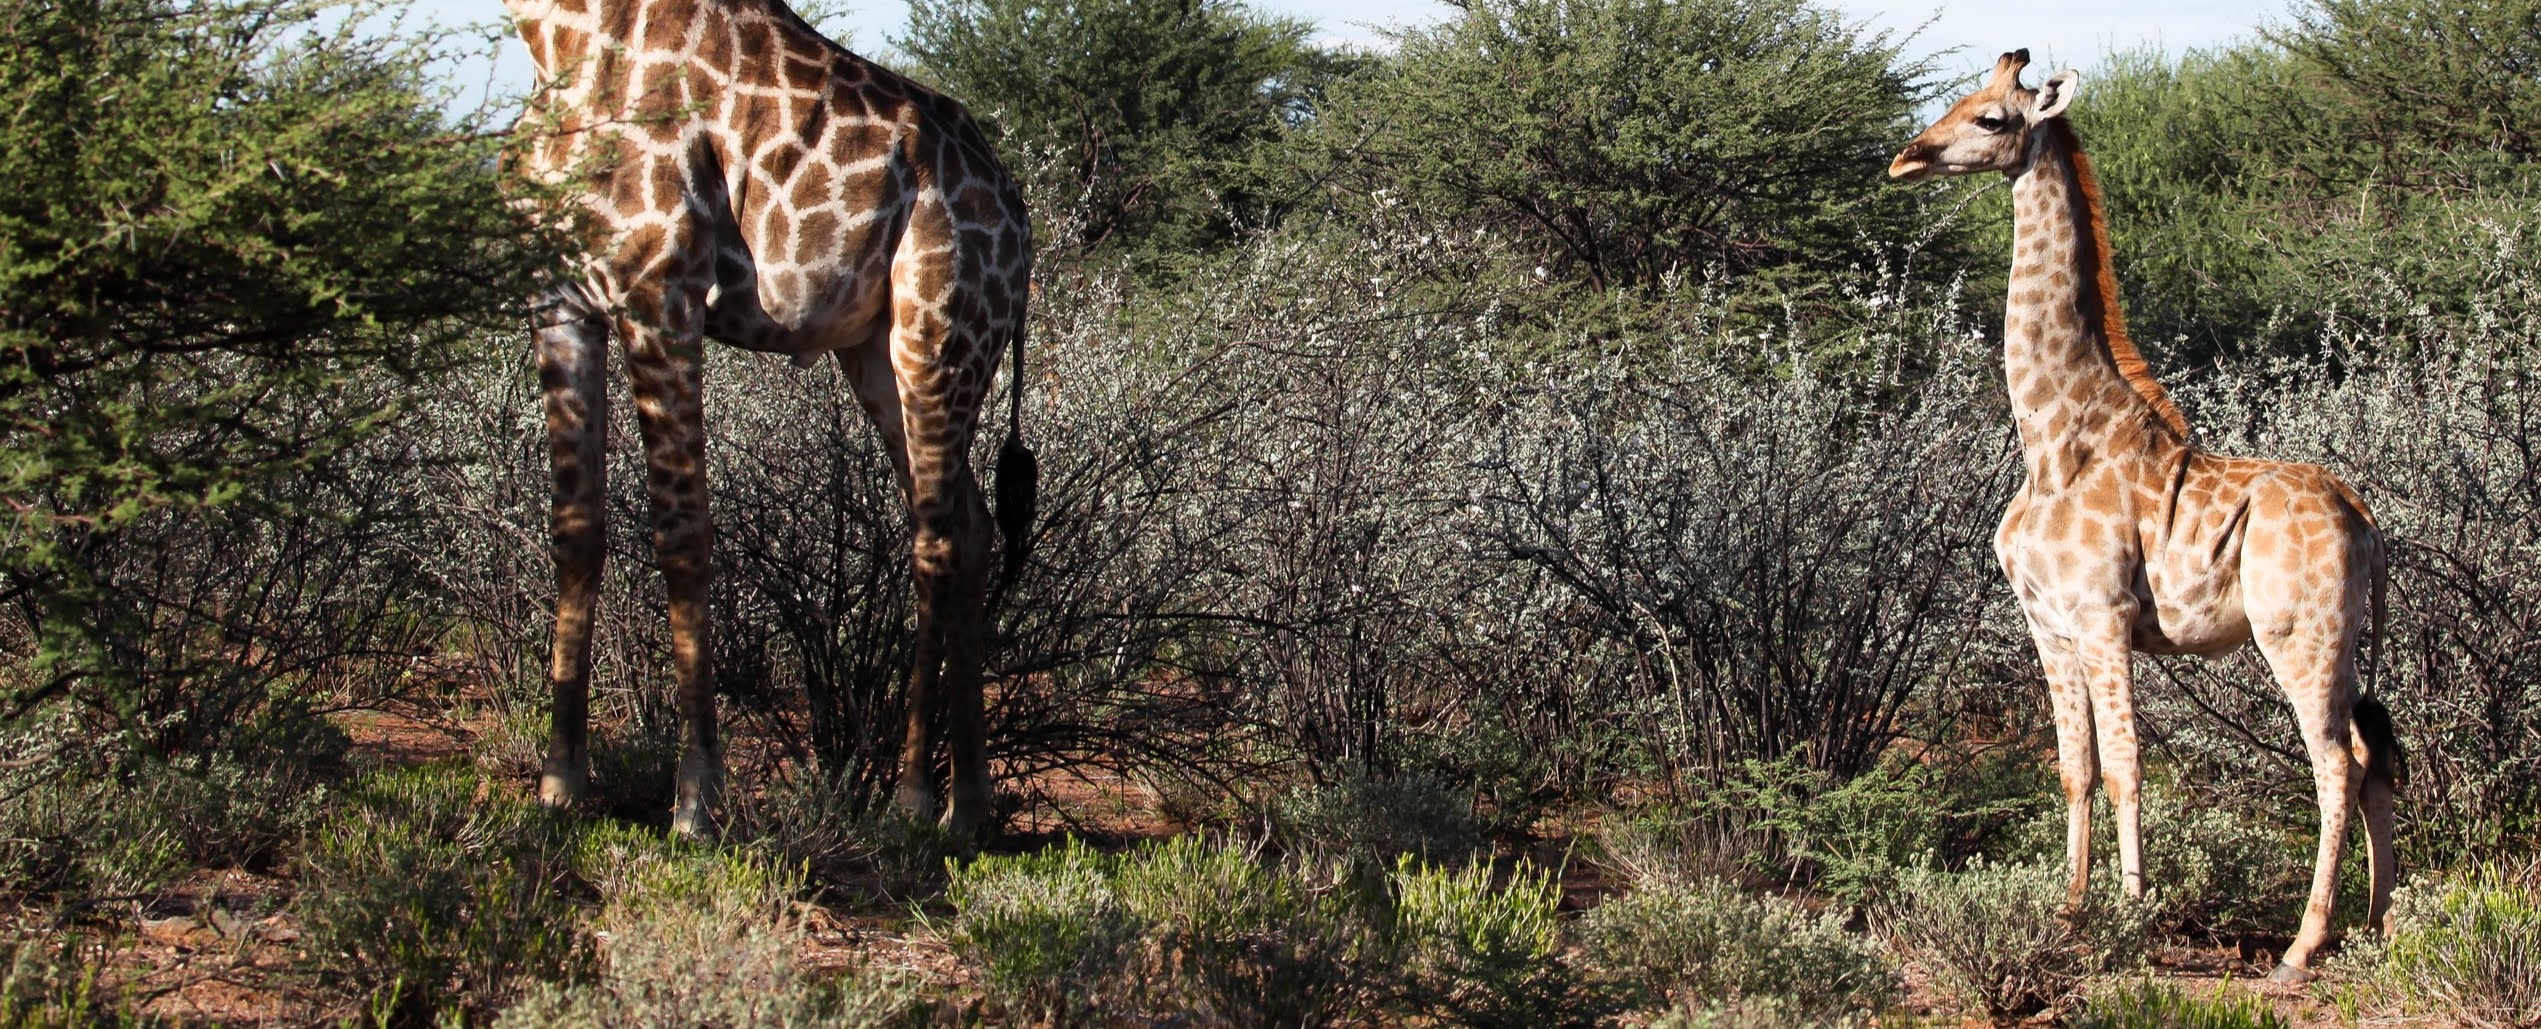 Dwarf giraffe ‘spotted’ in Namibia and Uganda